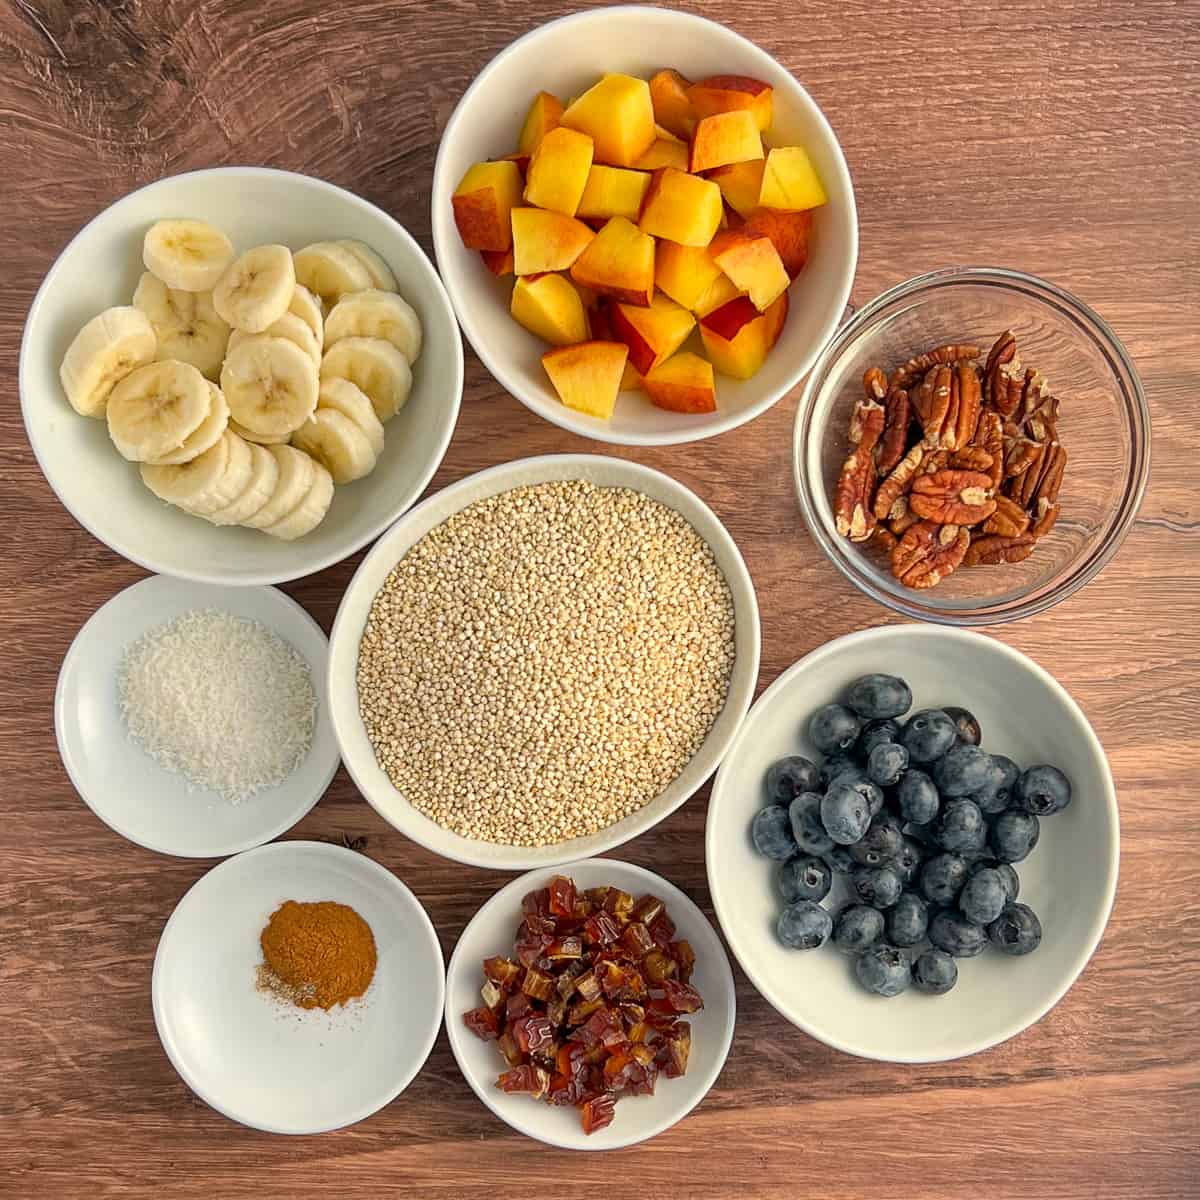 top view of ingredients for the vegan quinoa breakfast bowl: peaches, banana, pecans, quinoa, shredded coconut, blueberries, dates, cinnamon, cardamom